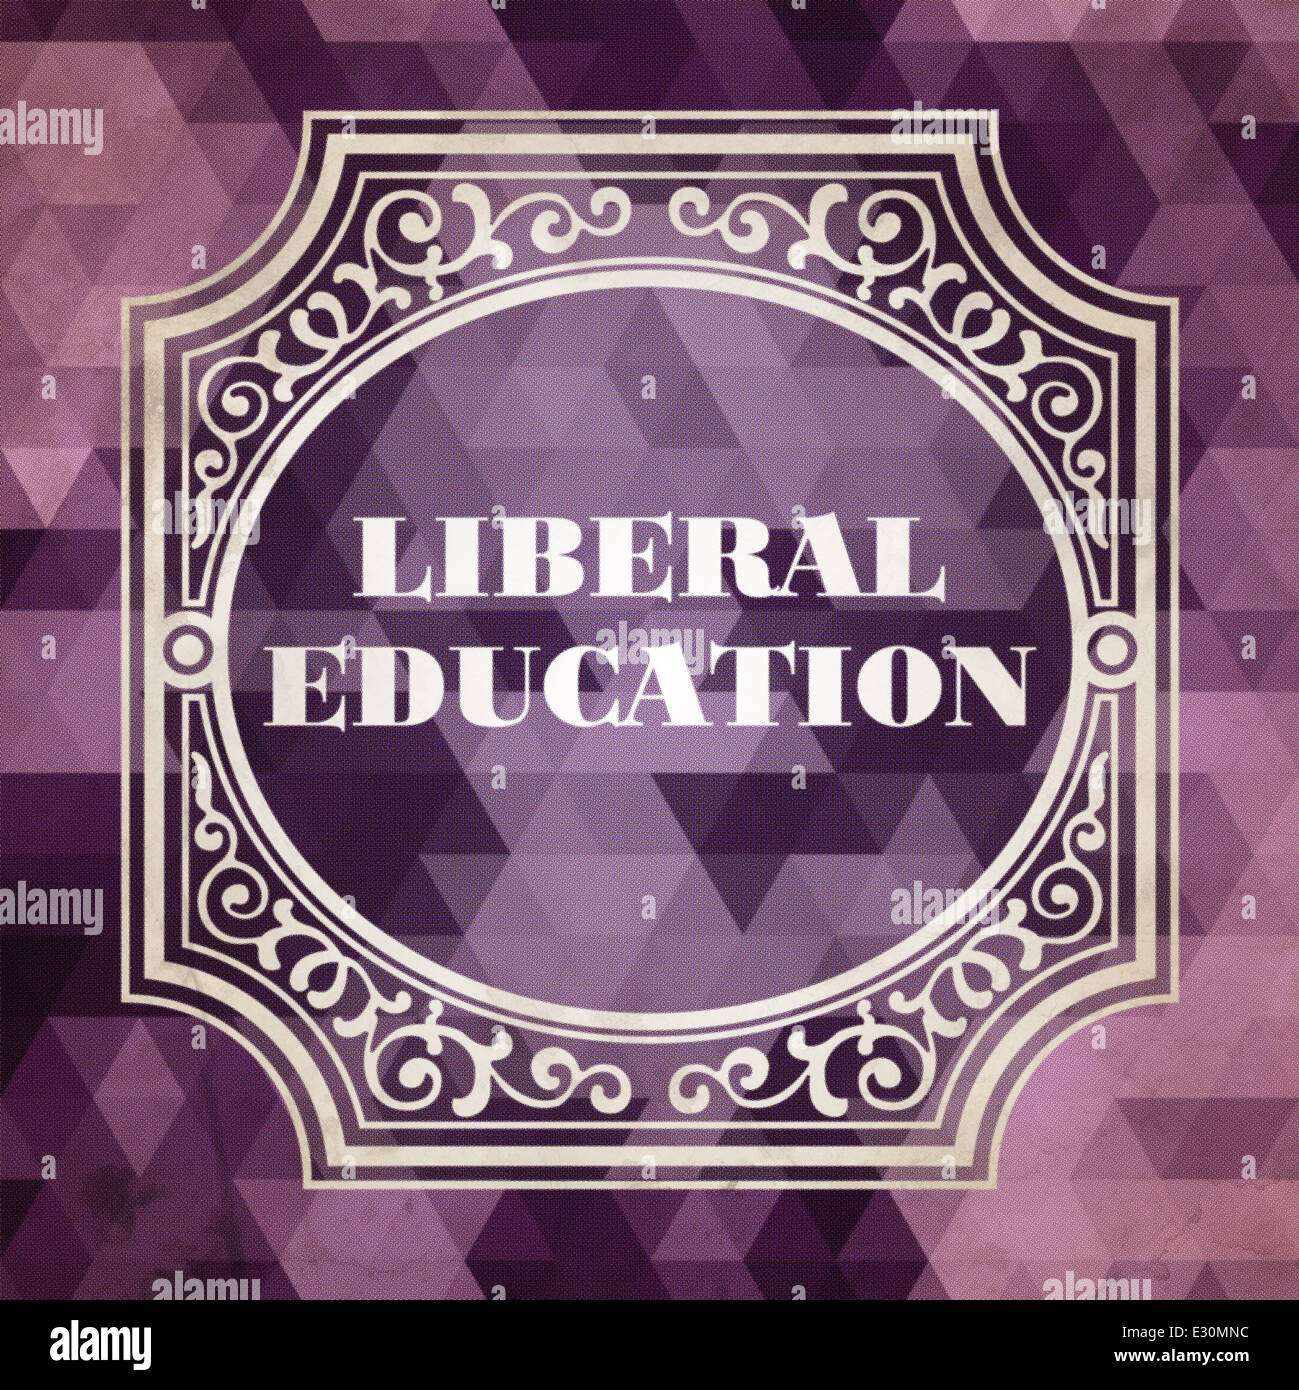 Liberal Education Concept. Vintage design. Stock Photo